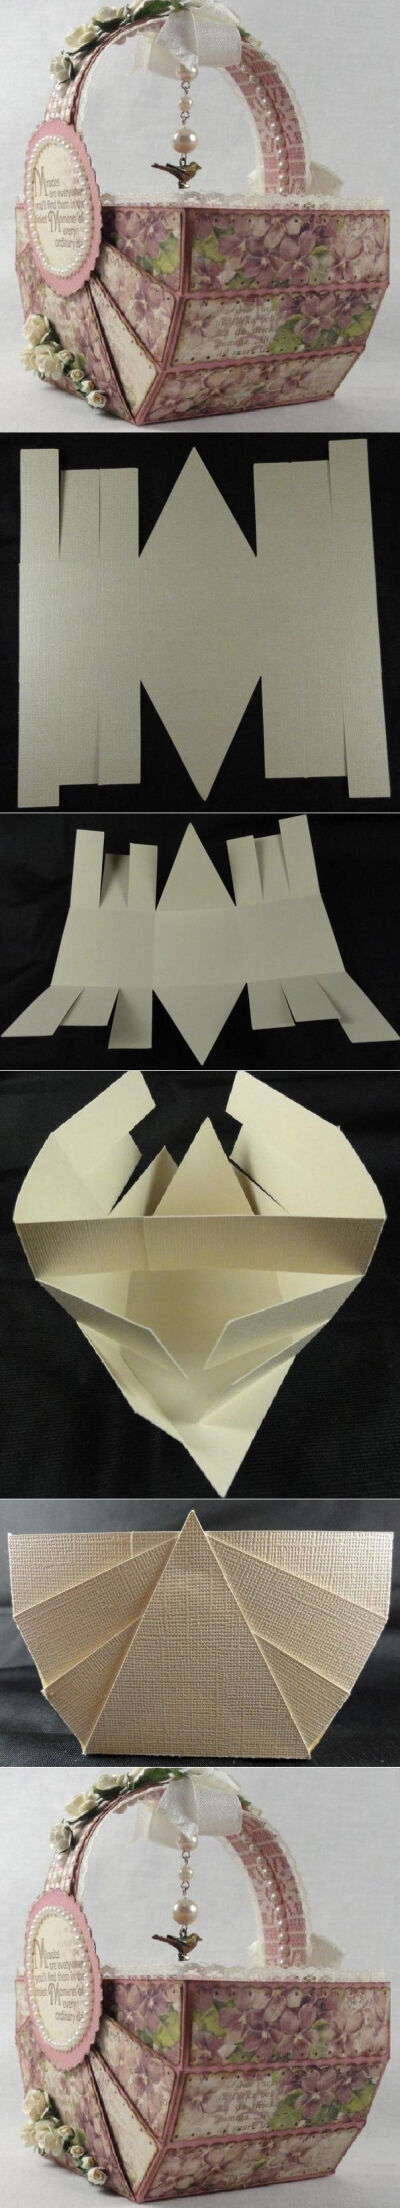 DIY Paper Basket DIY